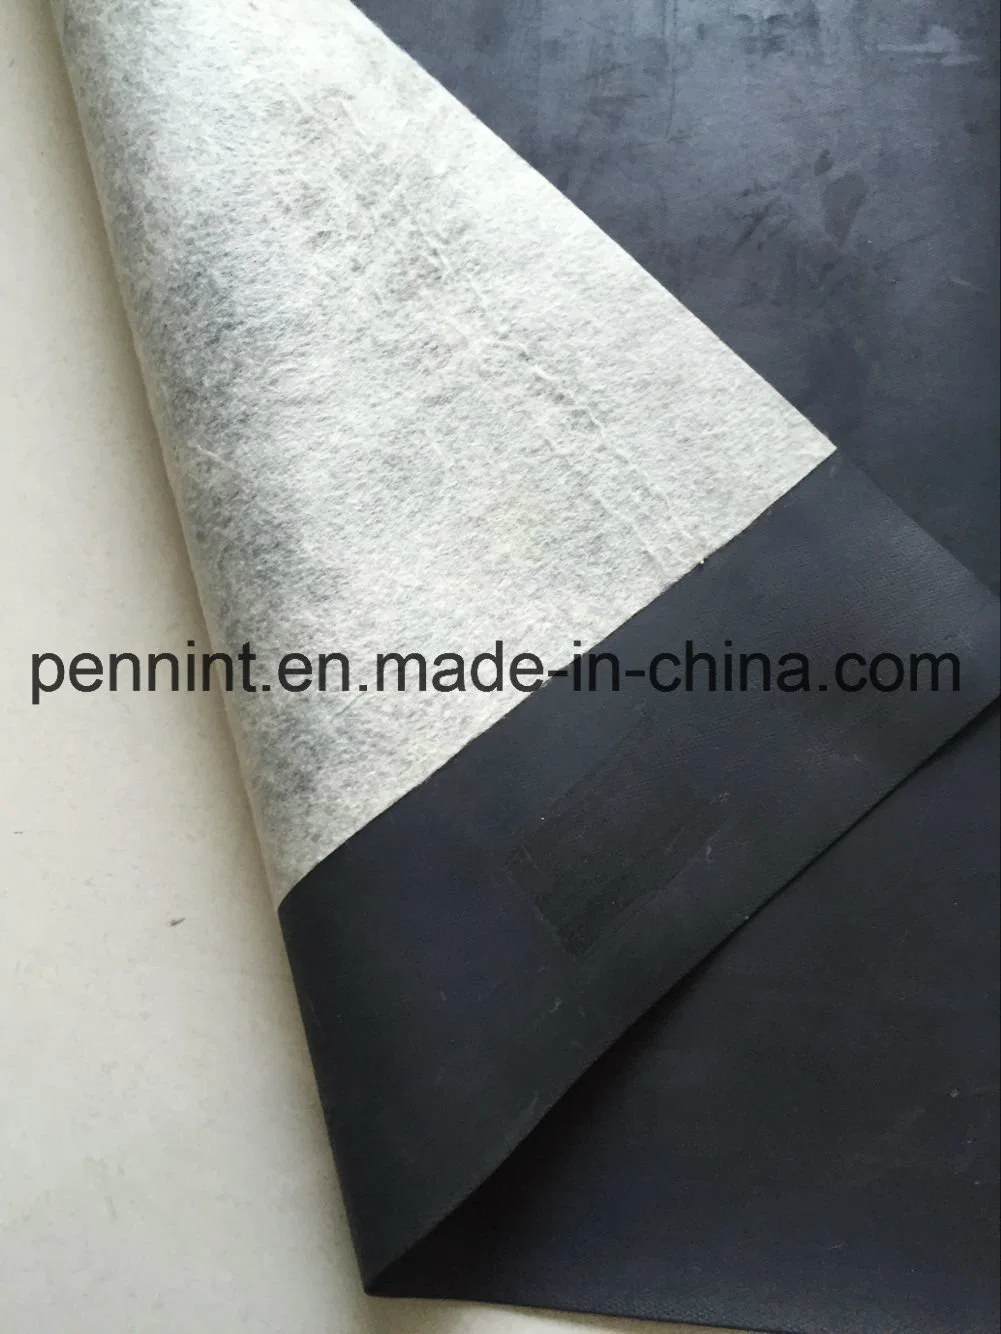 Fabric Backing High Elastic Rubber Waterproof Material 12m Width